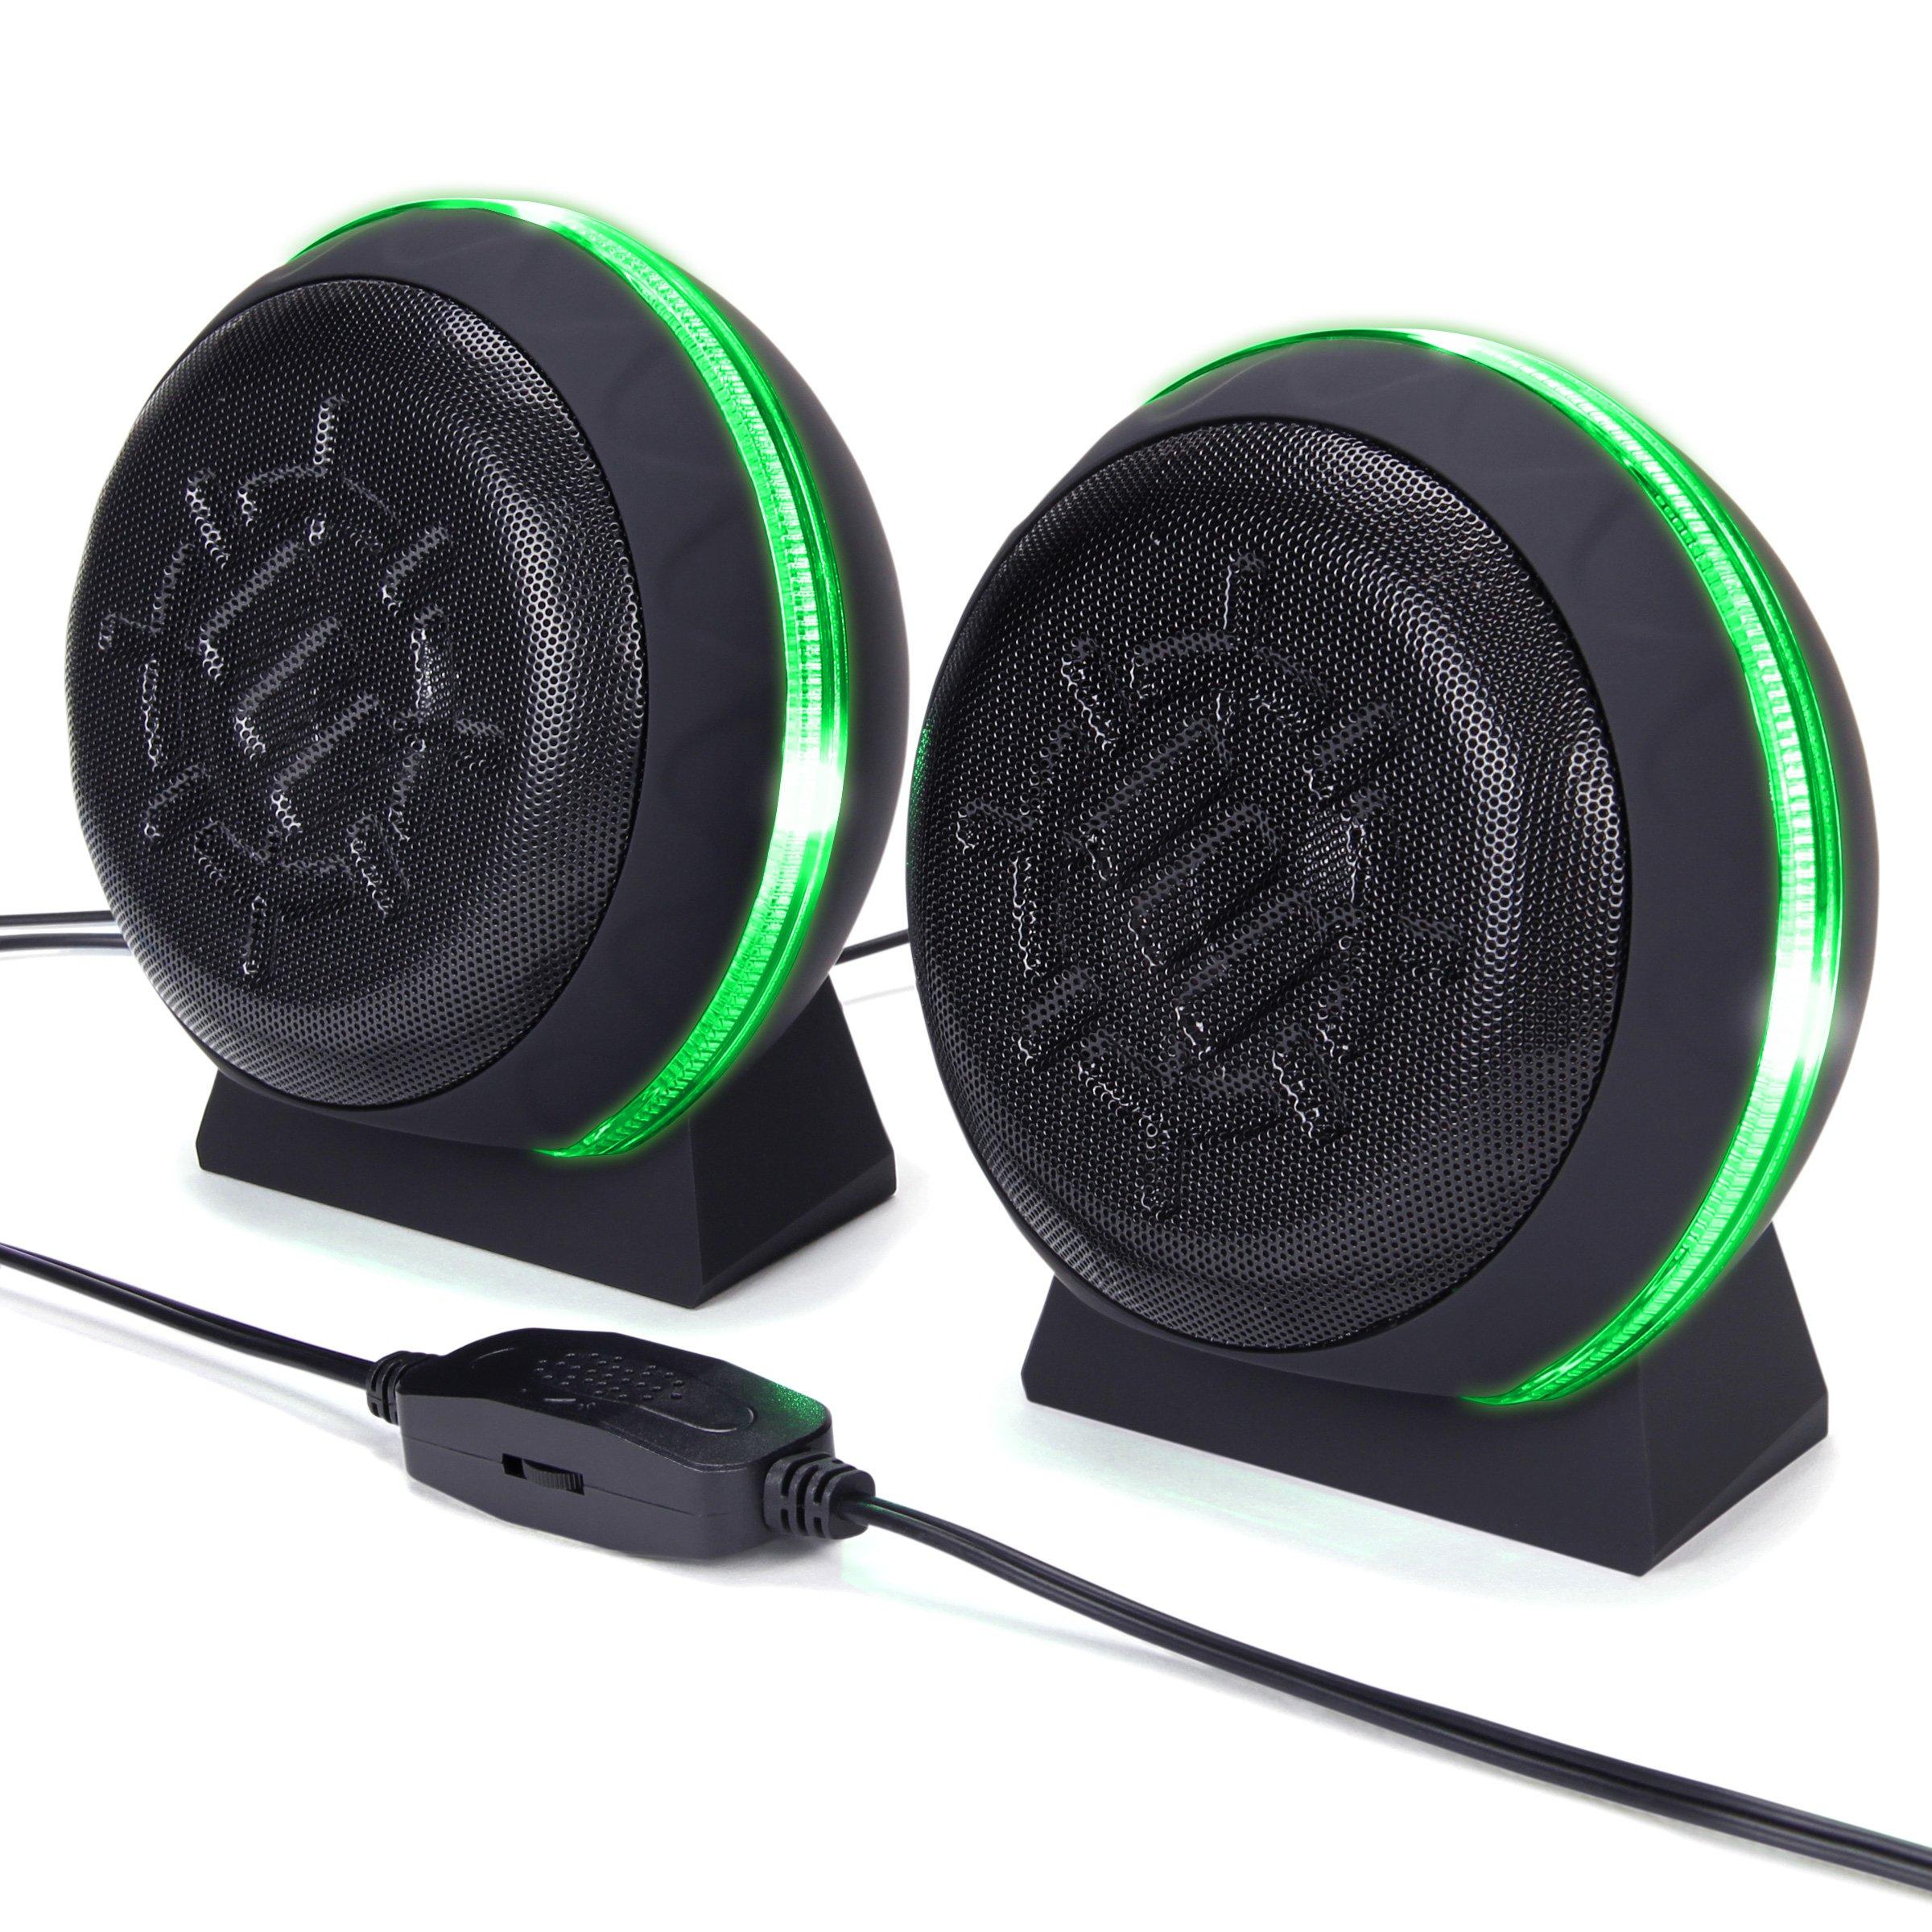 list item 1 of 9 ENHANCE SL2 LED Gaming Computer Speakers Green